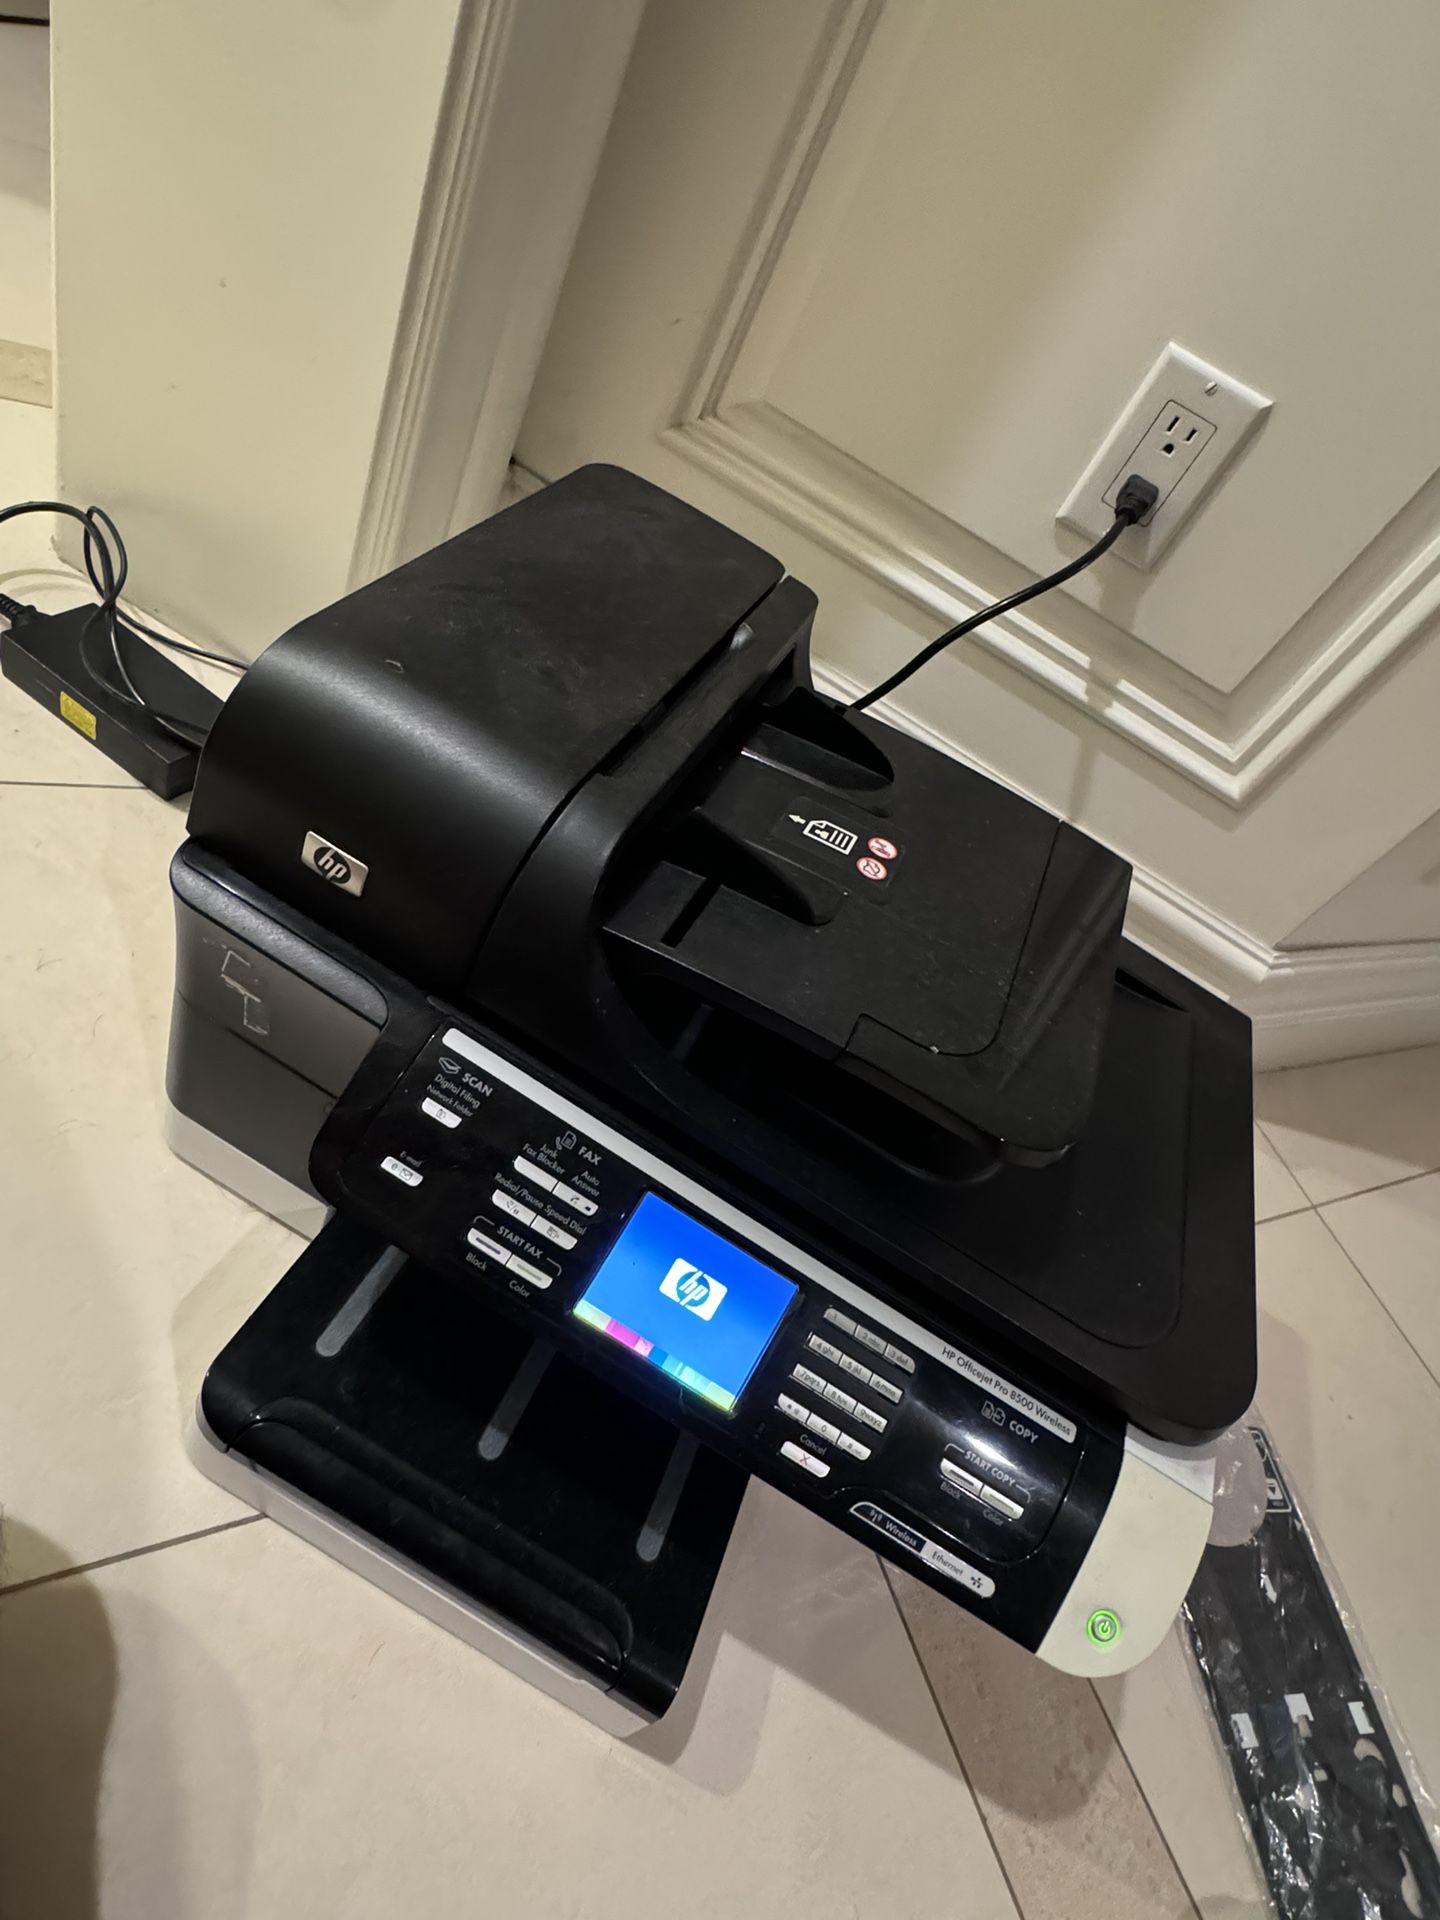 Hp Officejet Pro 8500 Printer